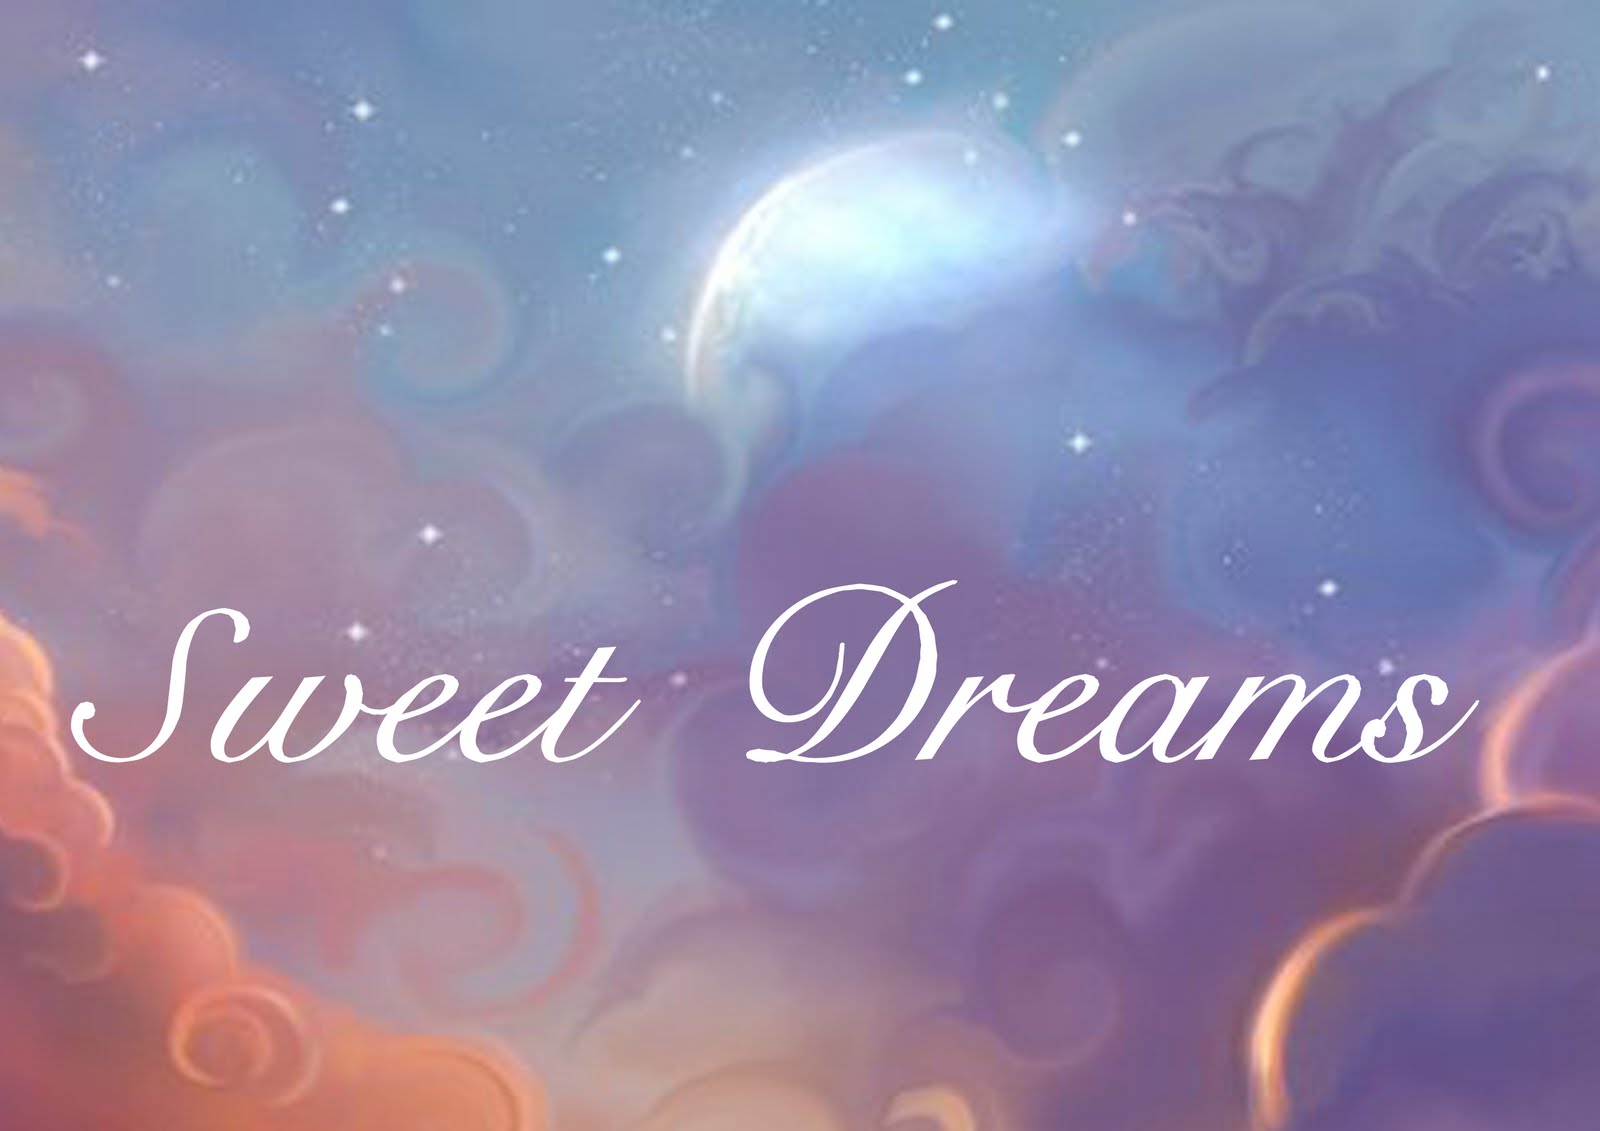 Sweet dreams boy текст. Sweet Dreams картинки. Sweet Dreams презентация. Вилюр Sweet Dreams. Картинка высокого качества Sweet Dreams.